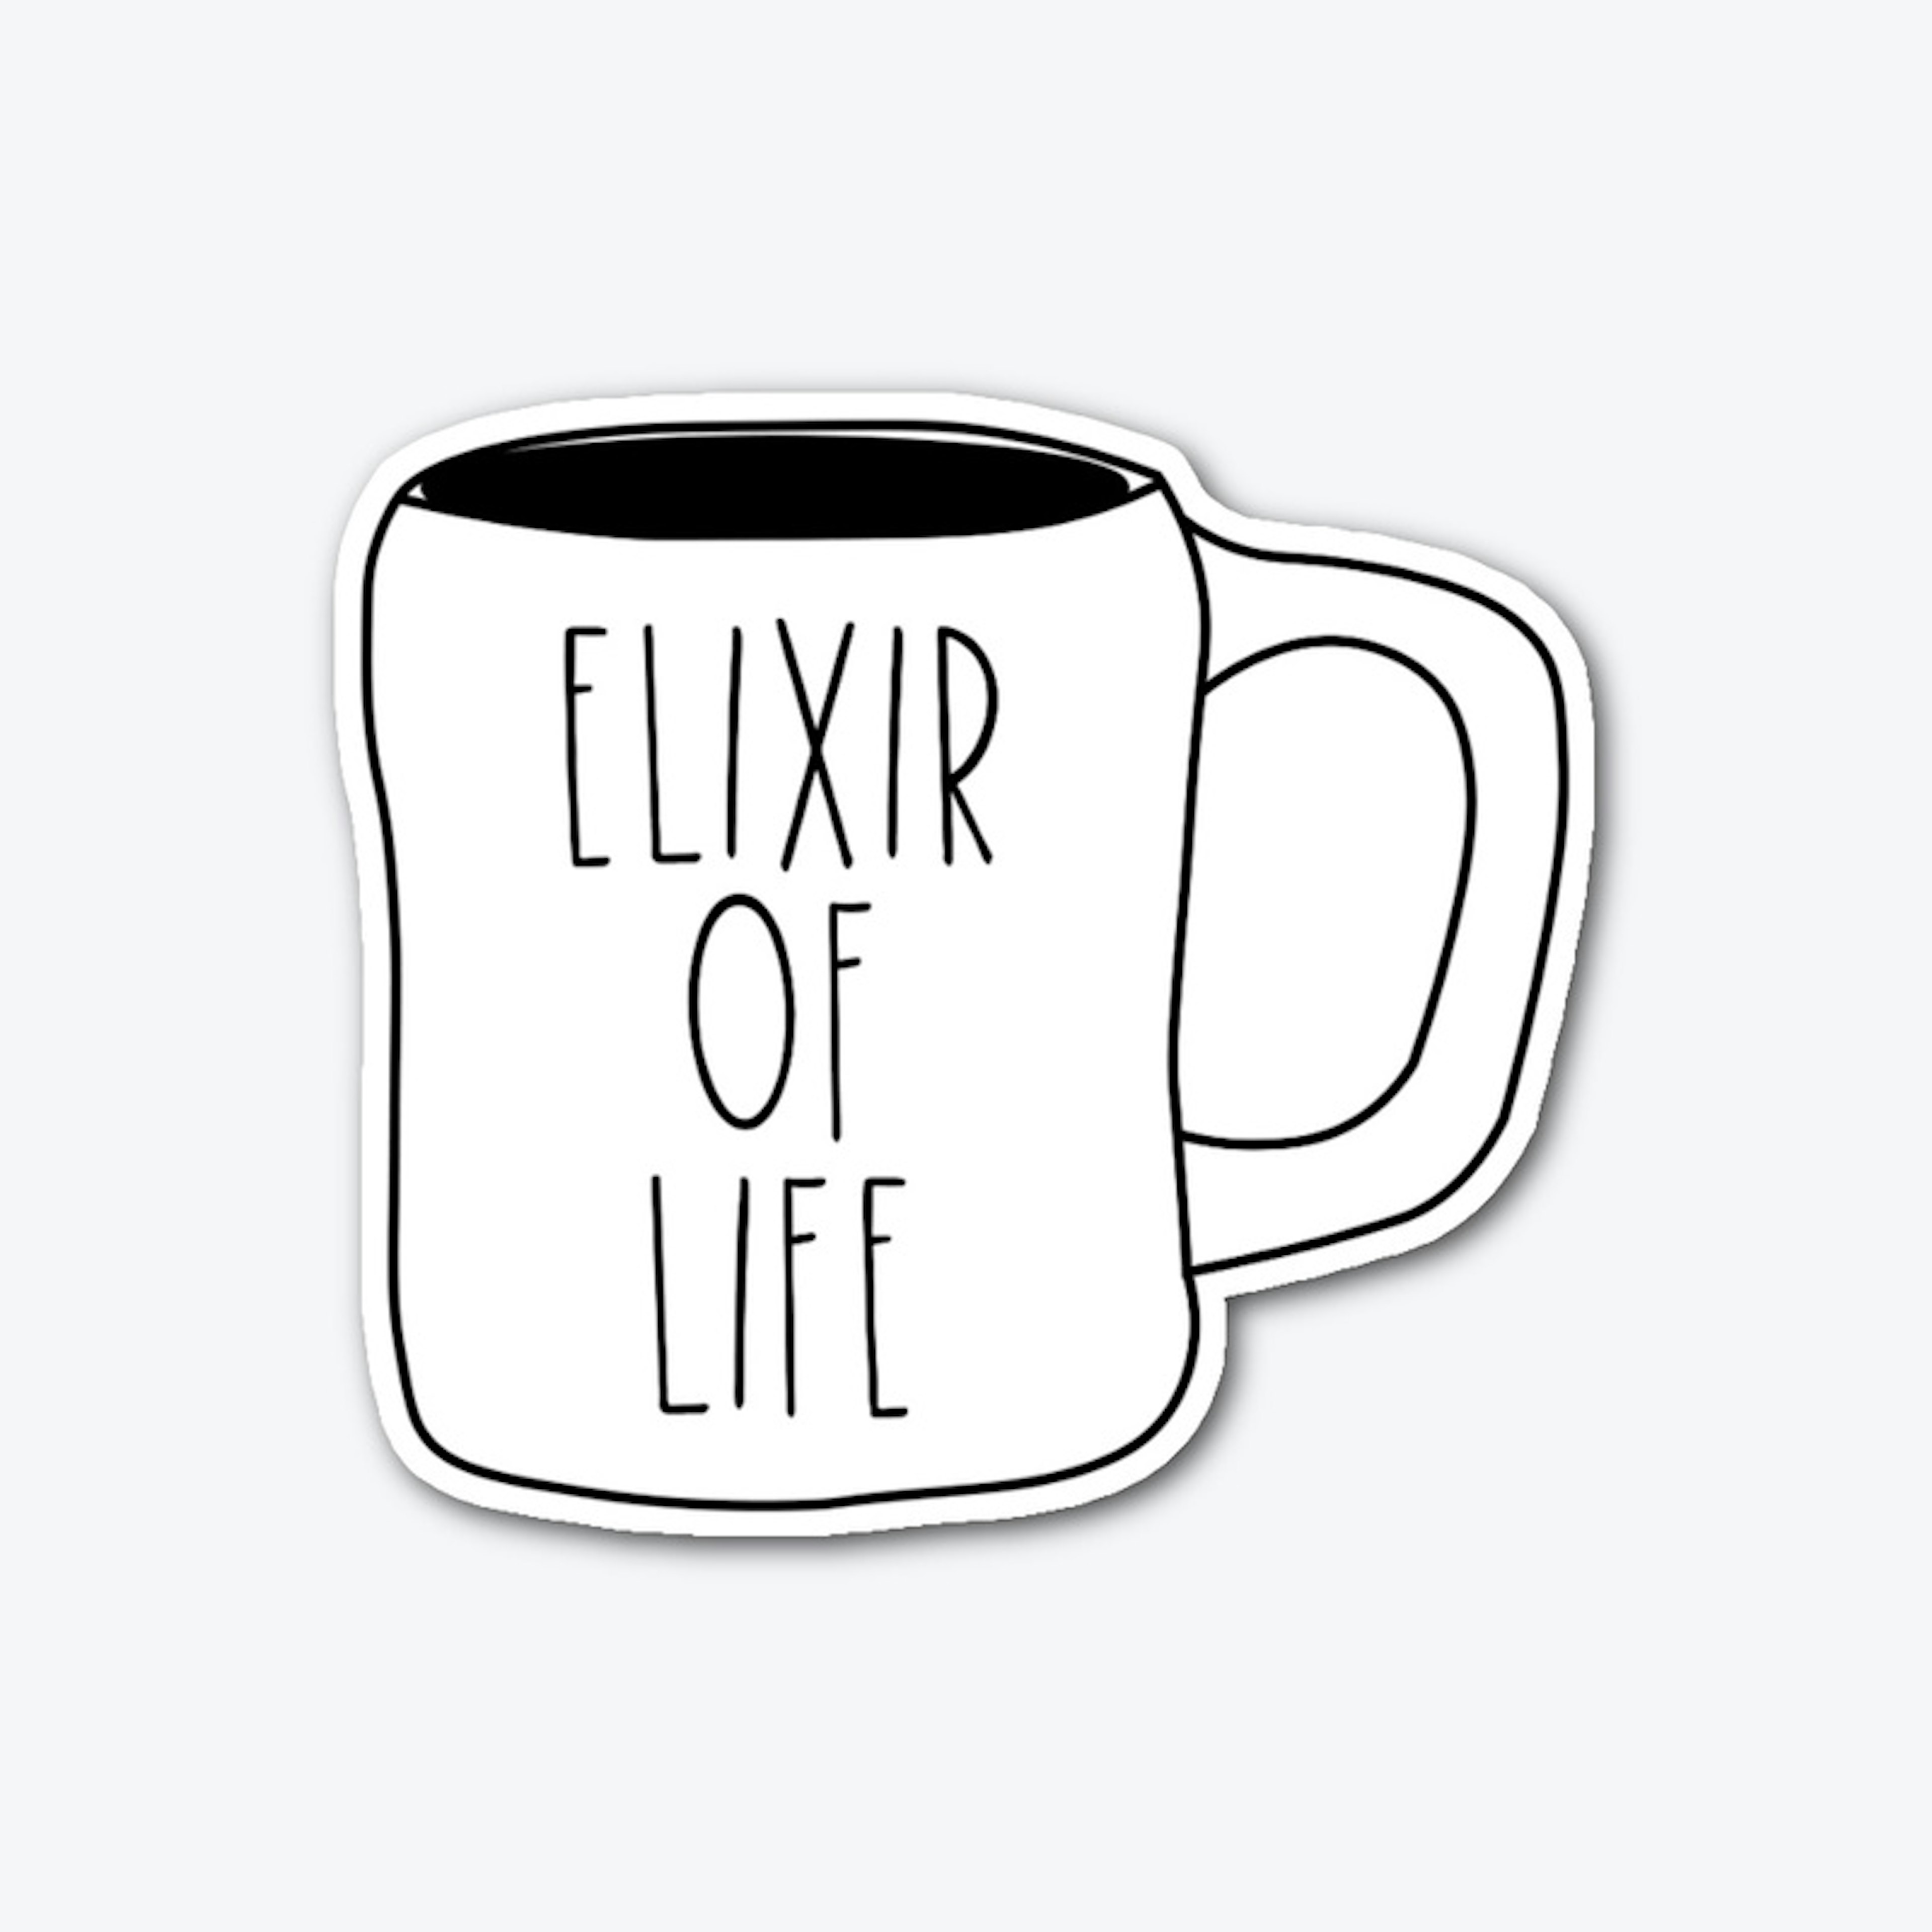 Elixir of Life Mug Sticker